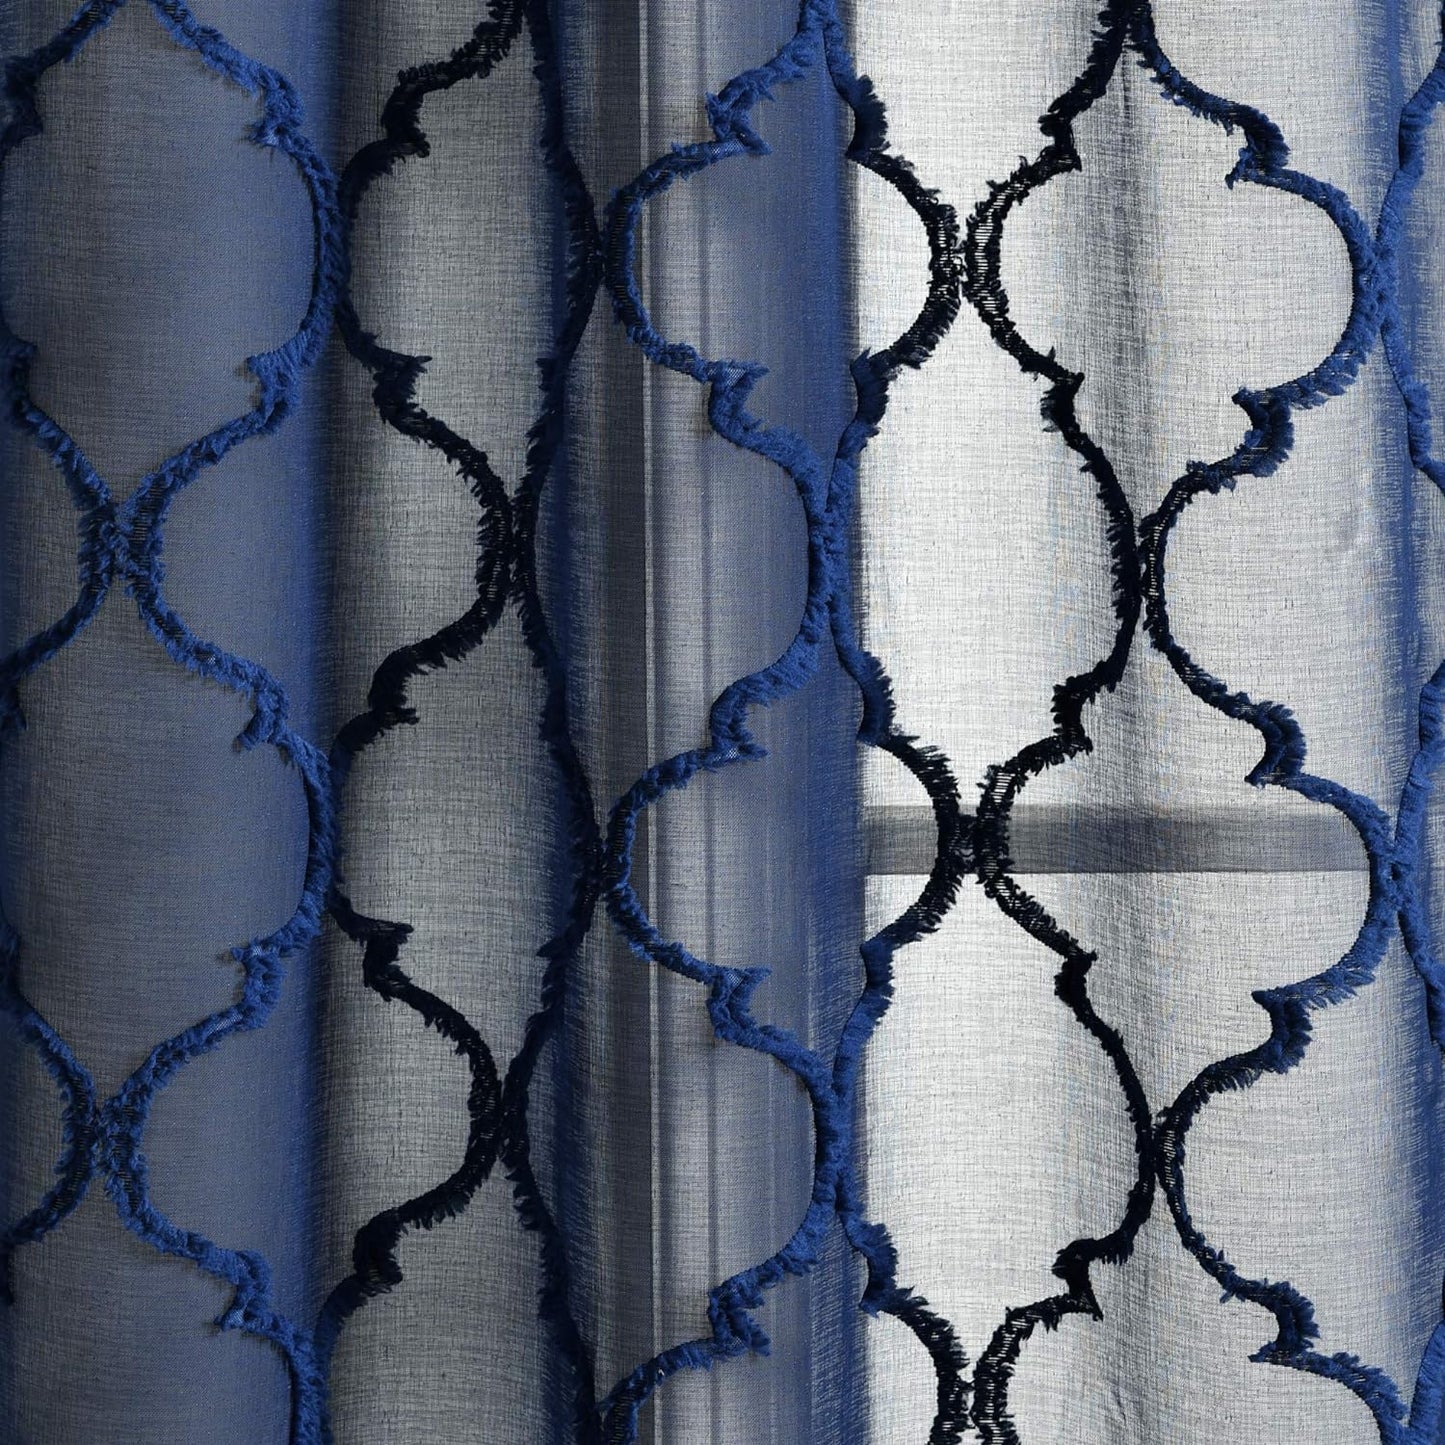 Lush Decor Navy Avon Trellis Grommet Sheer Window Curtain Panel Pair (84" X 38")  Triangle Home Fashions   